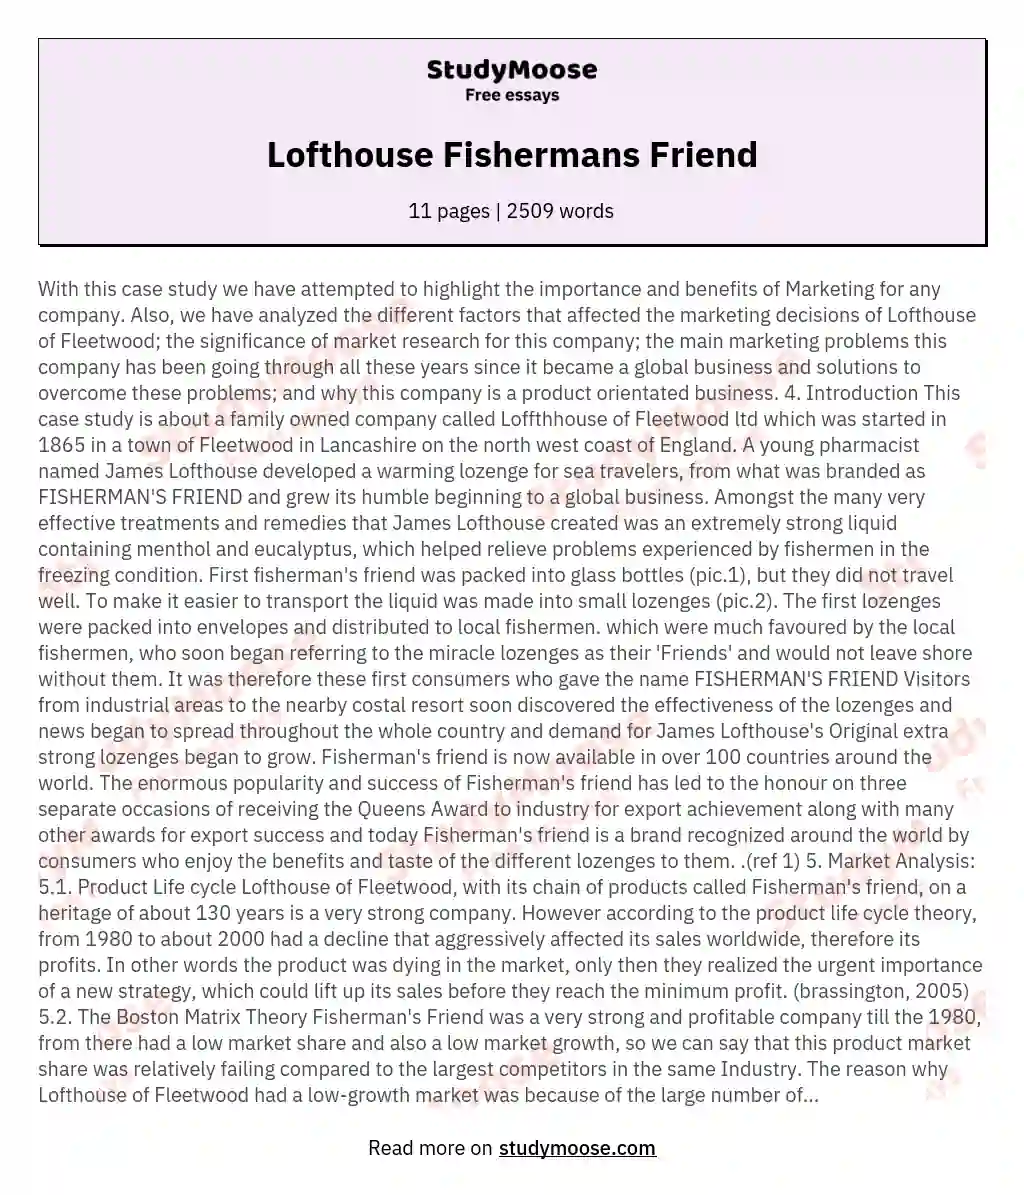 Lofthouse Fishermans Friend